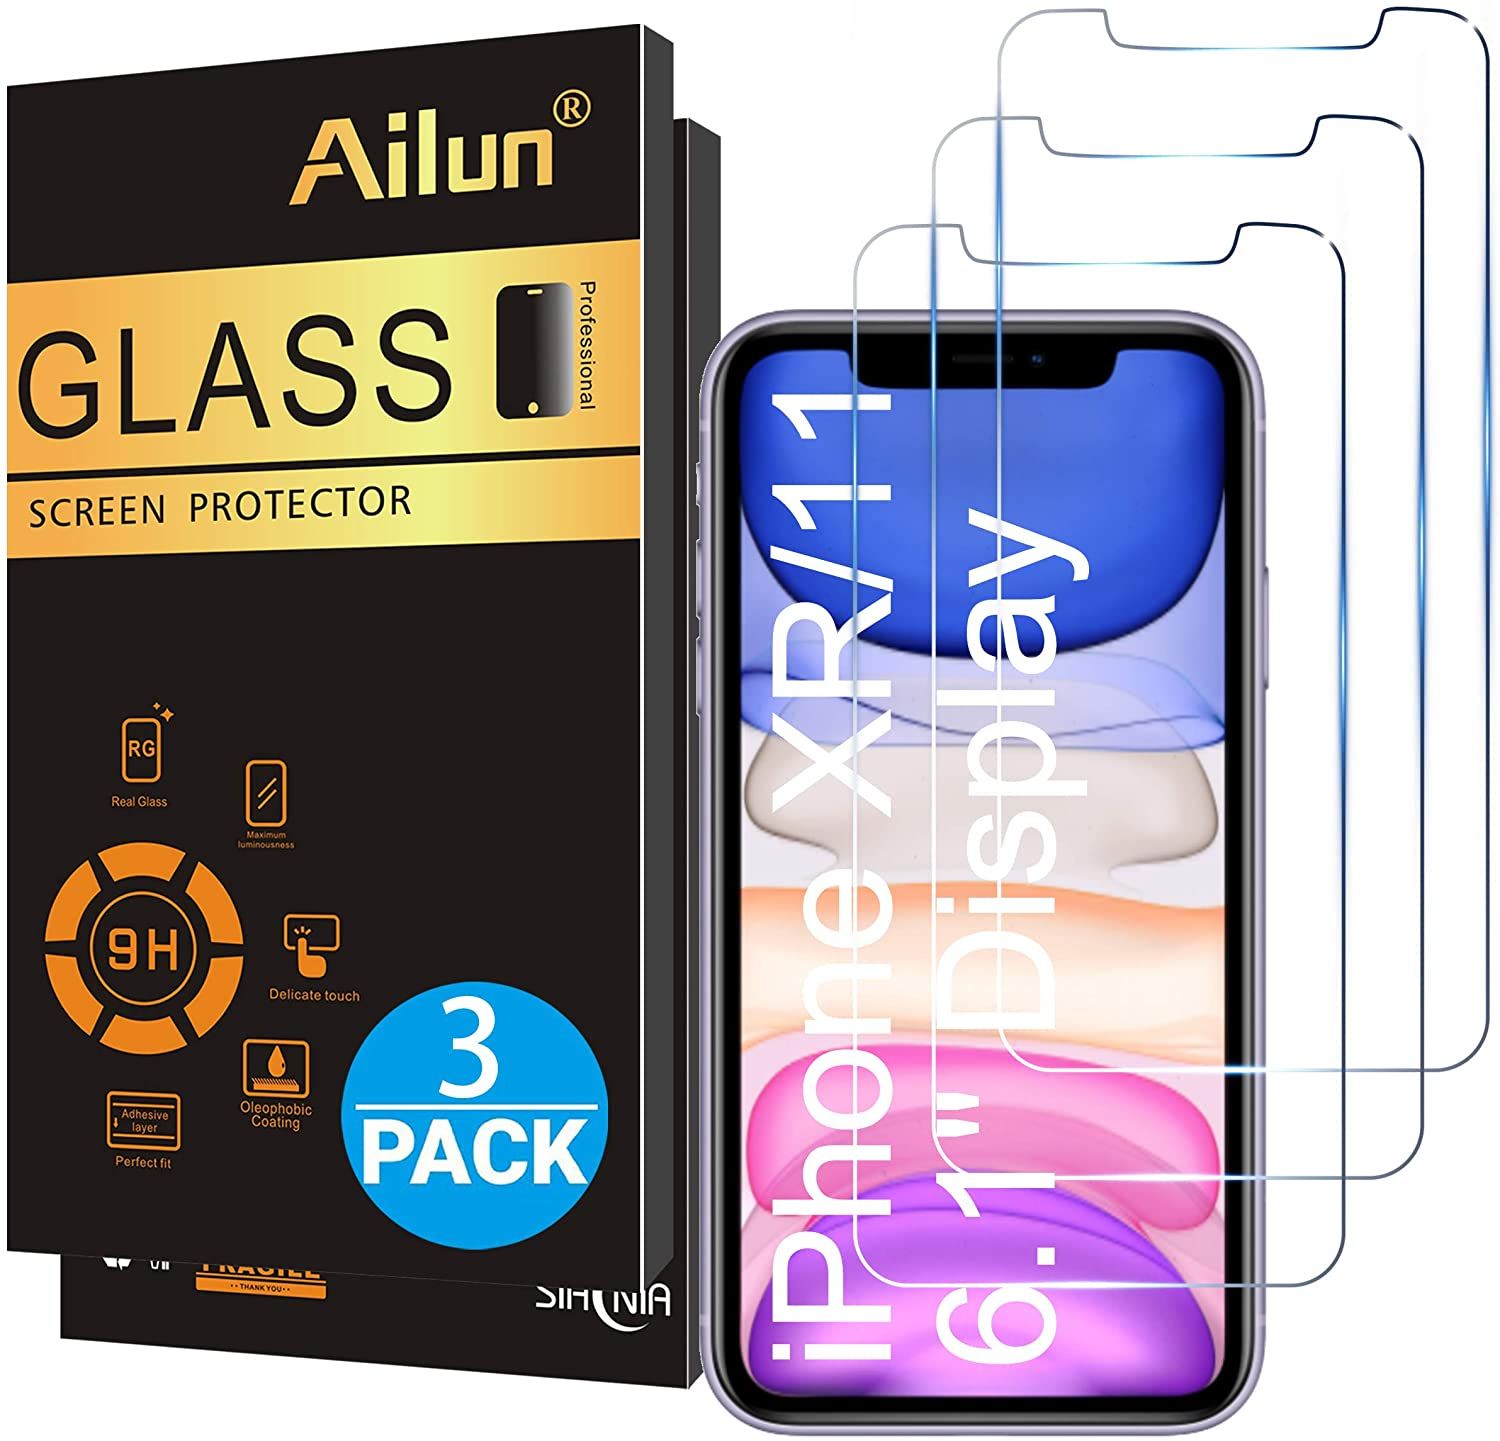 Ailun Glass Screen Protector a